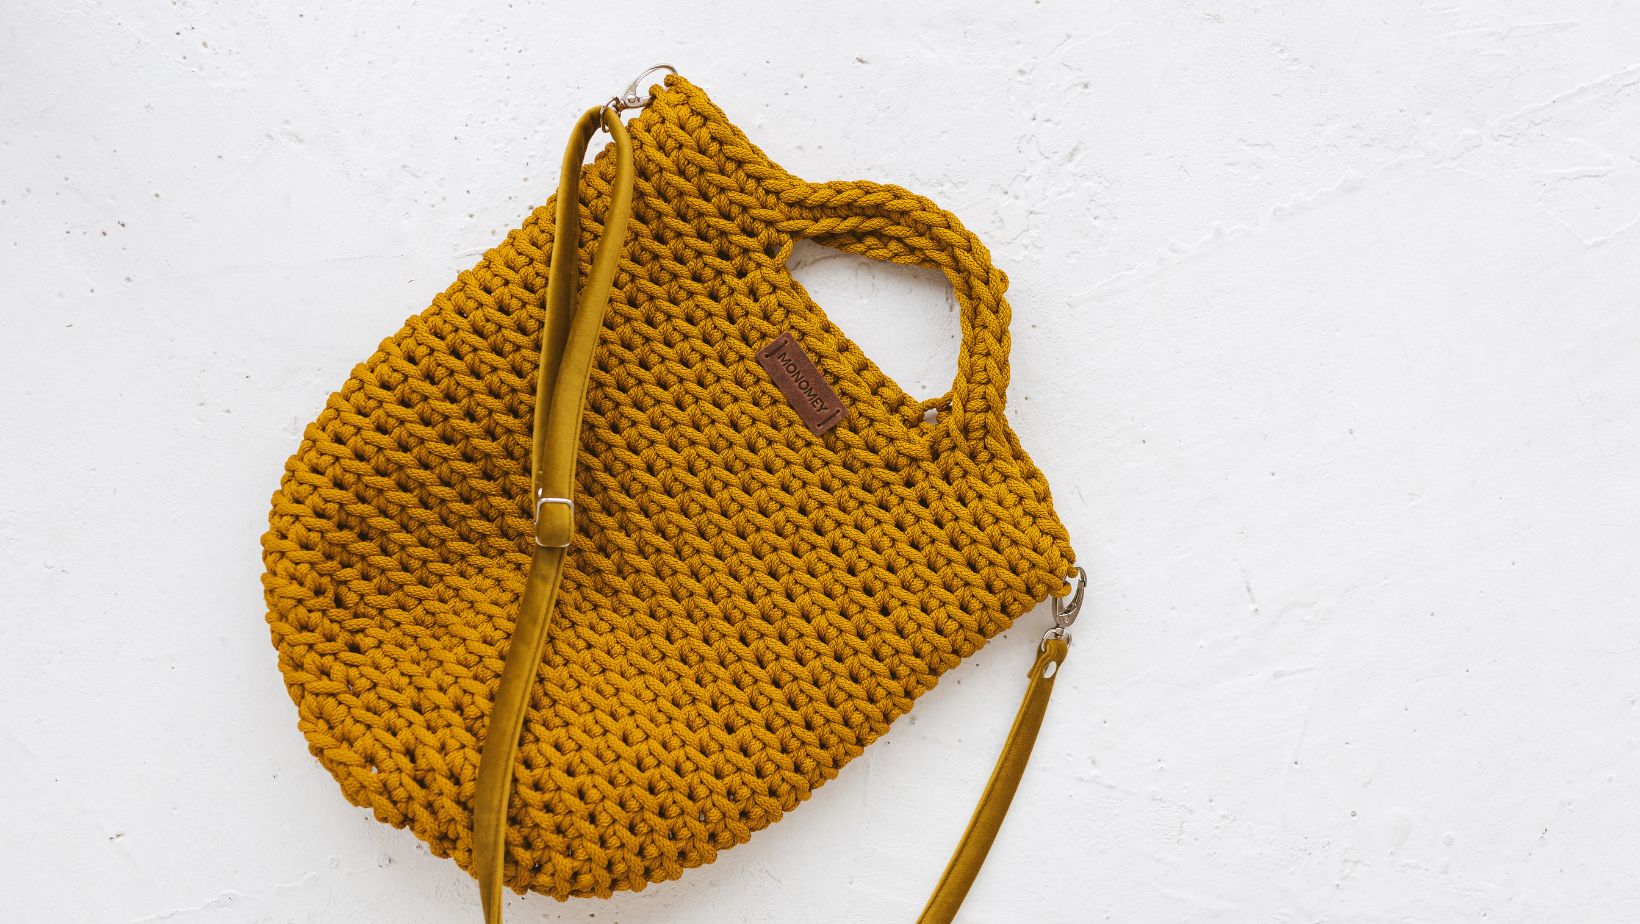 Crochet bag kits